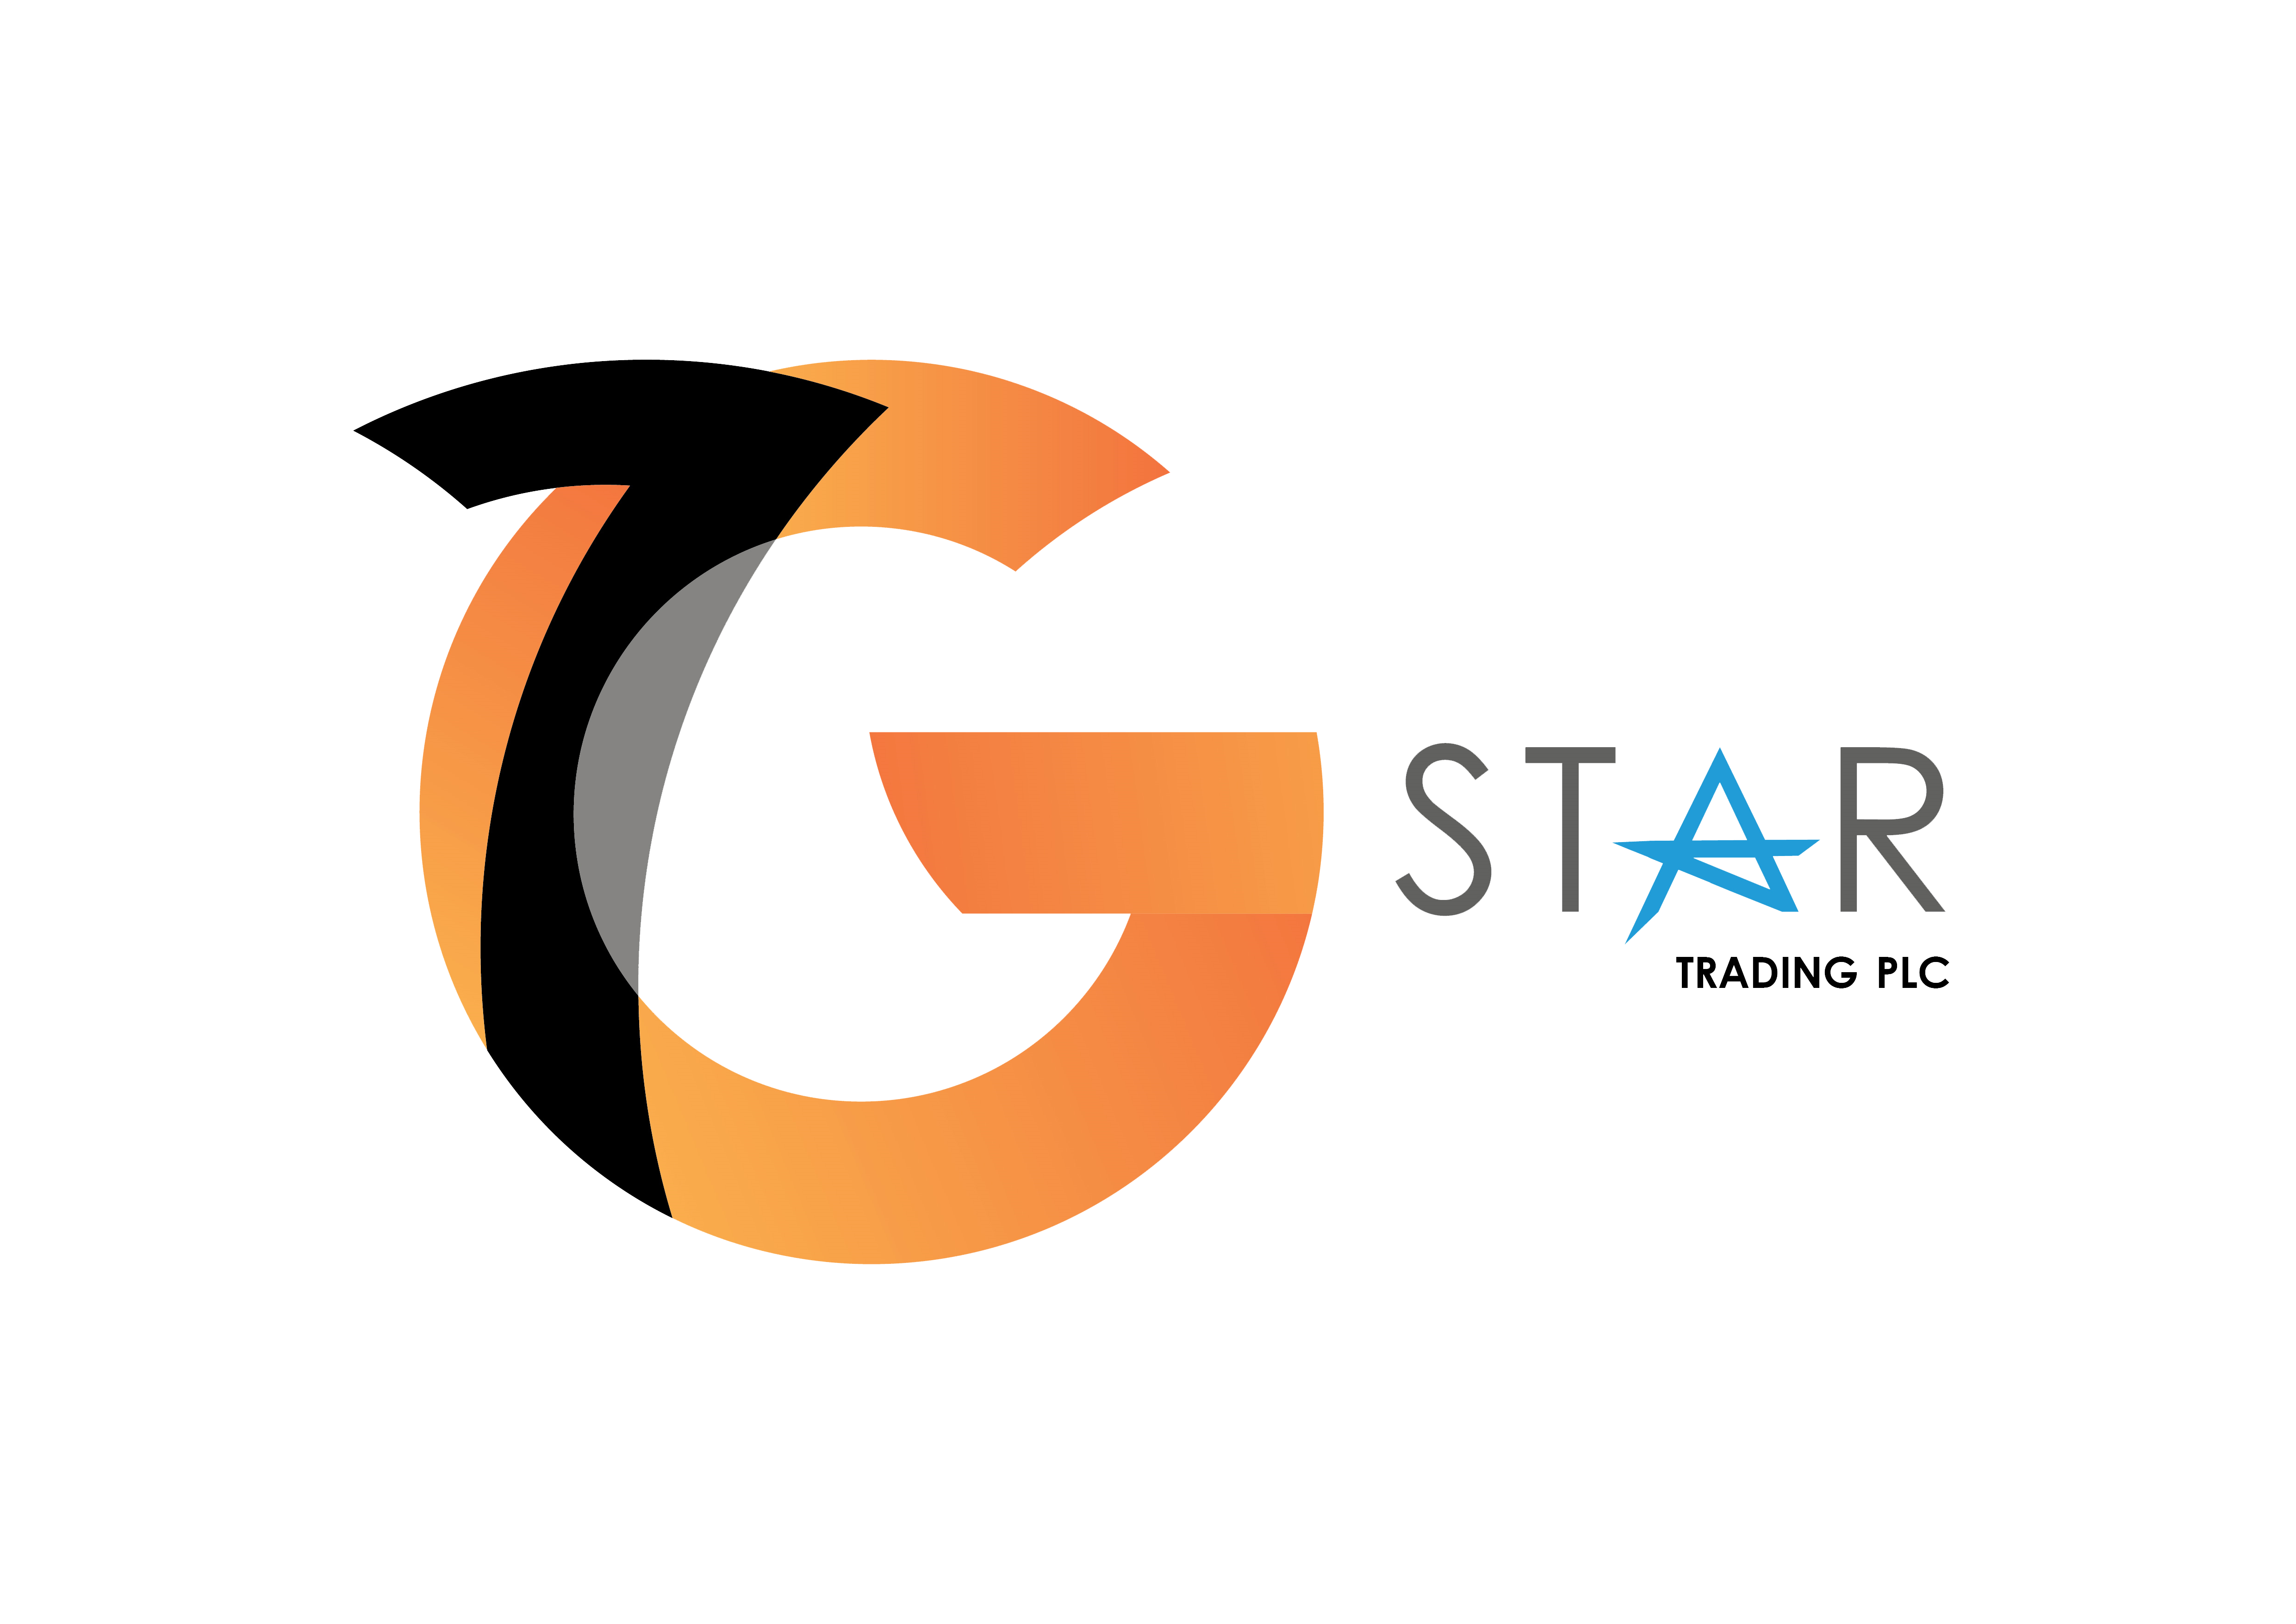 7g star logo